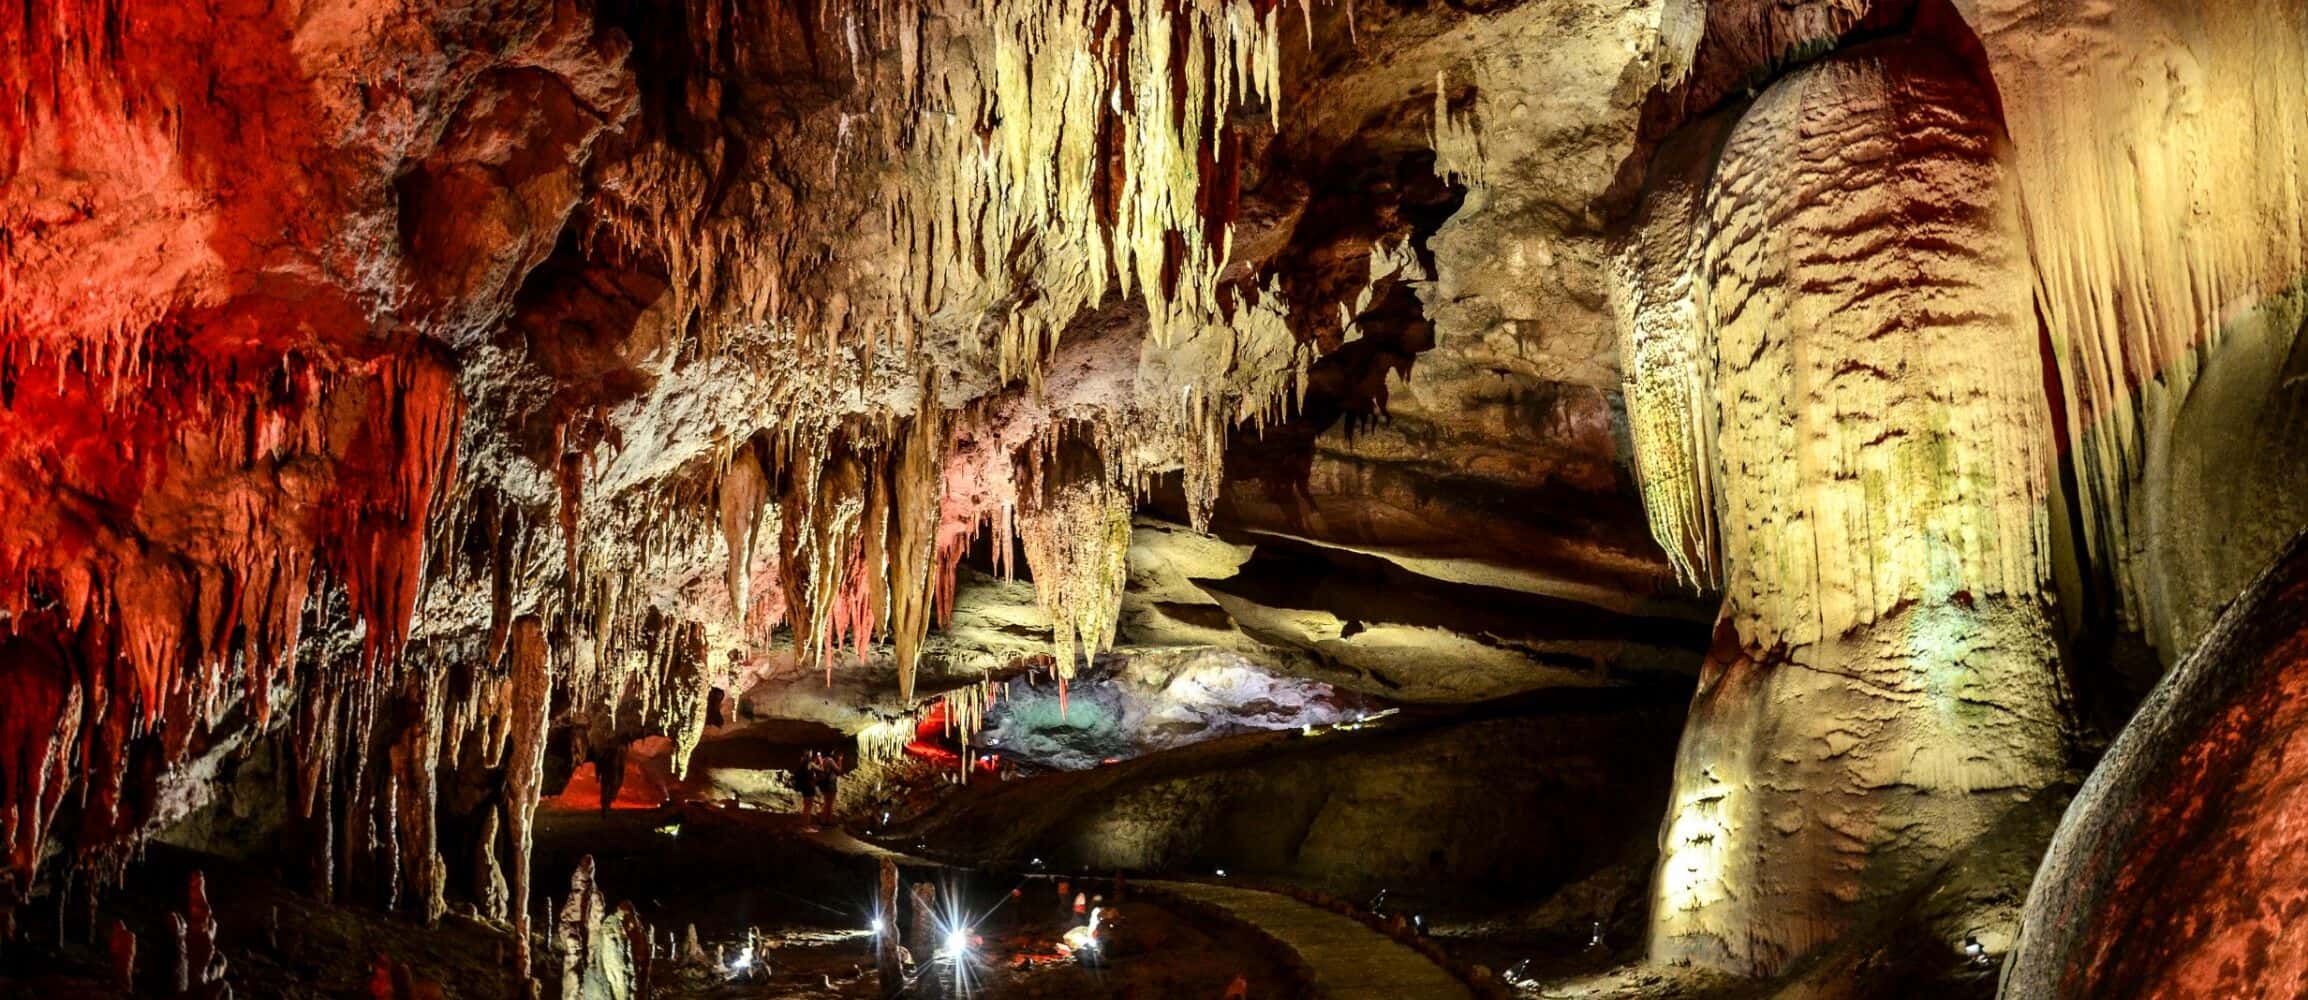 1-Day Tour to Georgia: Kutaisi and breathtaking Prometheus Cave from Tbilisi